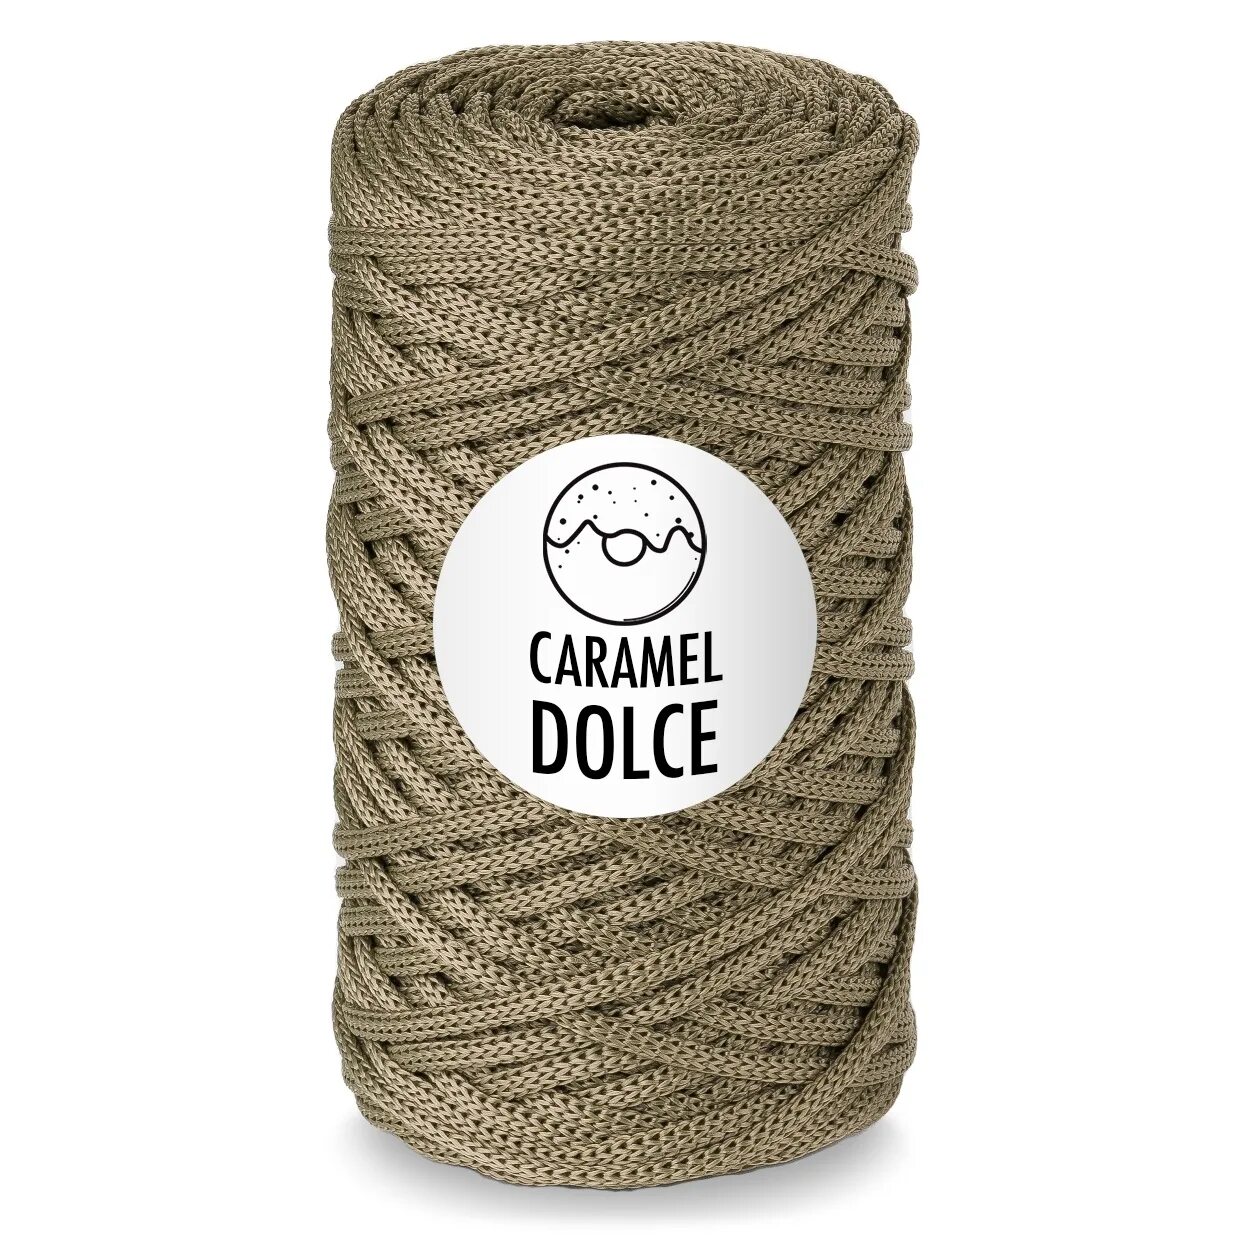 Caramel dolce. Карамель Дольче шнур. Шнур Caramel палитра. Шнур для вязания Caramel Dolce. Полиэфирный шнур для вязания сумок.